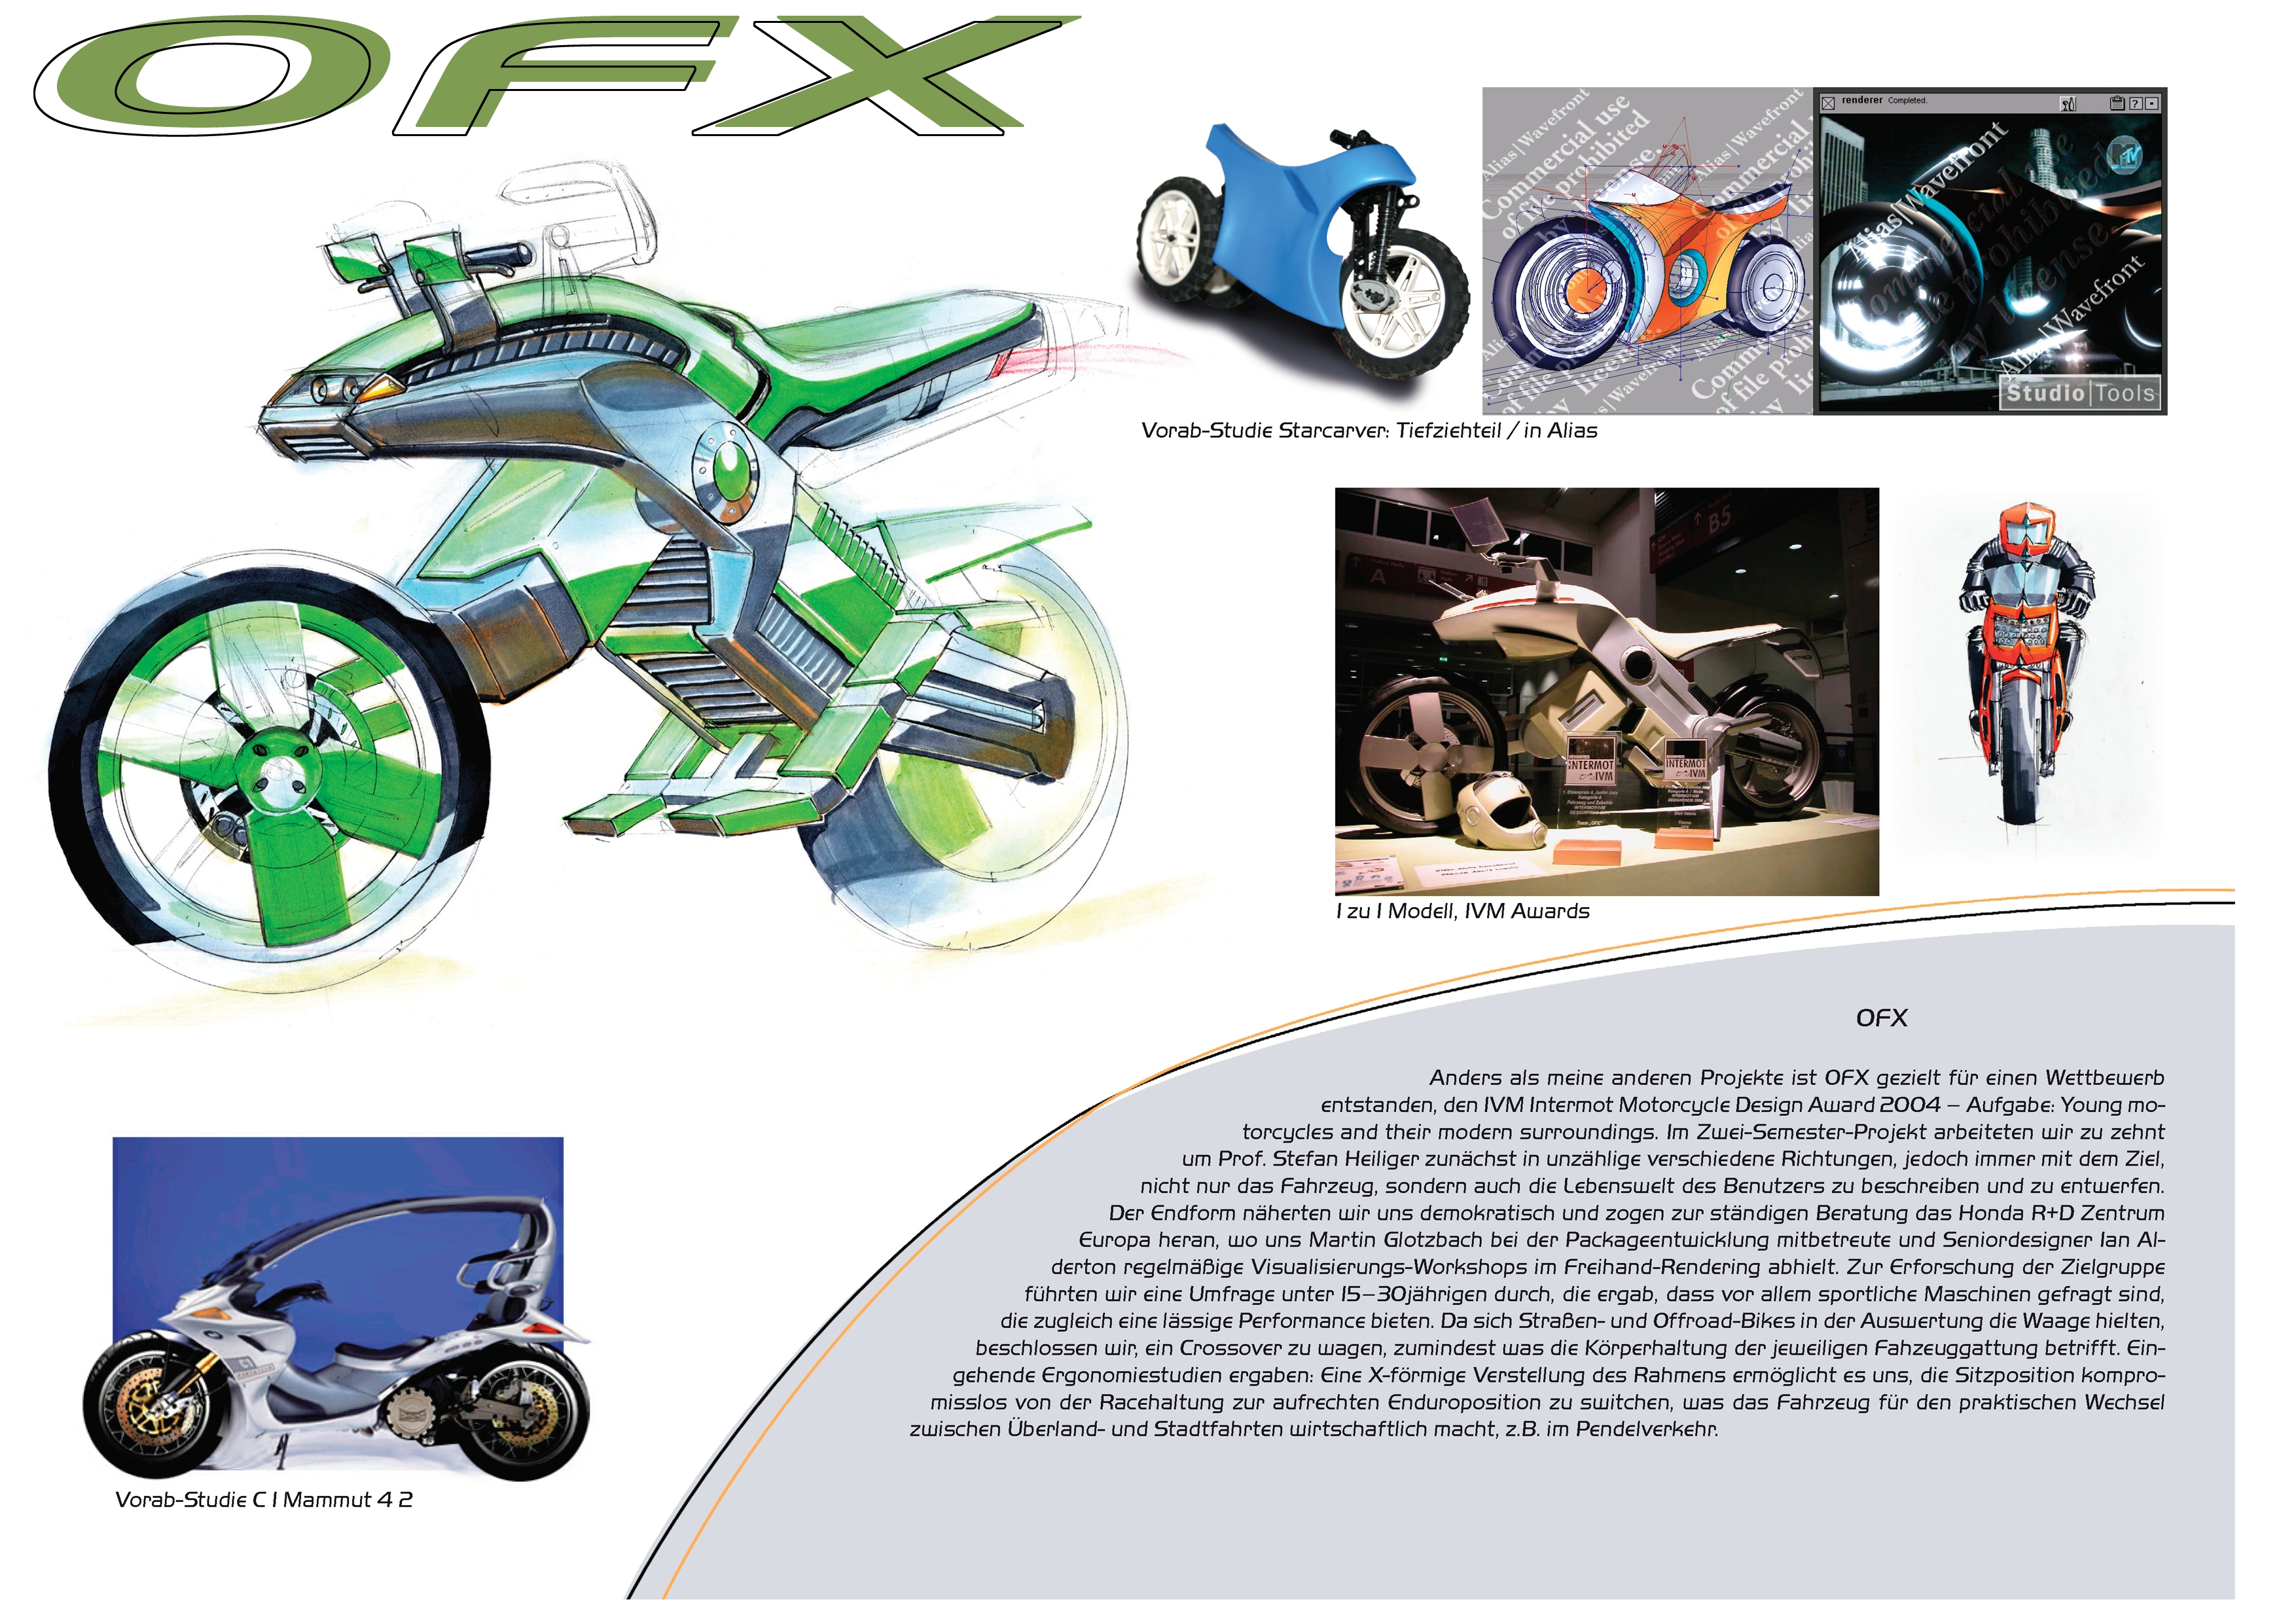 Frankfurt-based-automotive-designer-tilmann-schlootz-design-branding-ux-product-design-Honda-Europe-hybrid-motorcycle-concept-OFX-cross-dirt-bike-street-race-bike-switch-positions-ergonomics-01